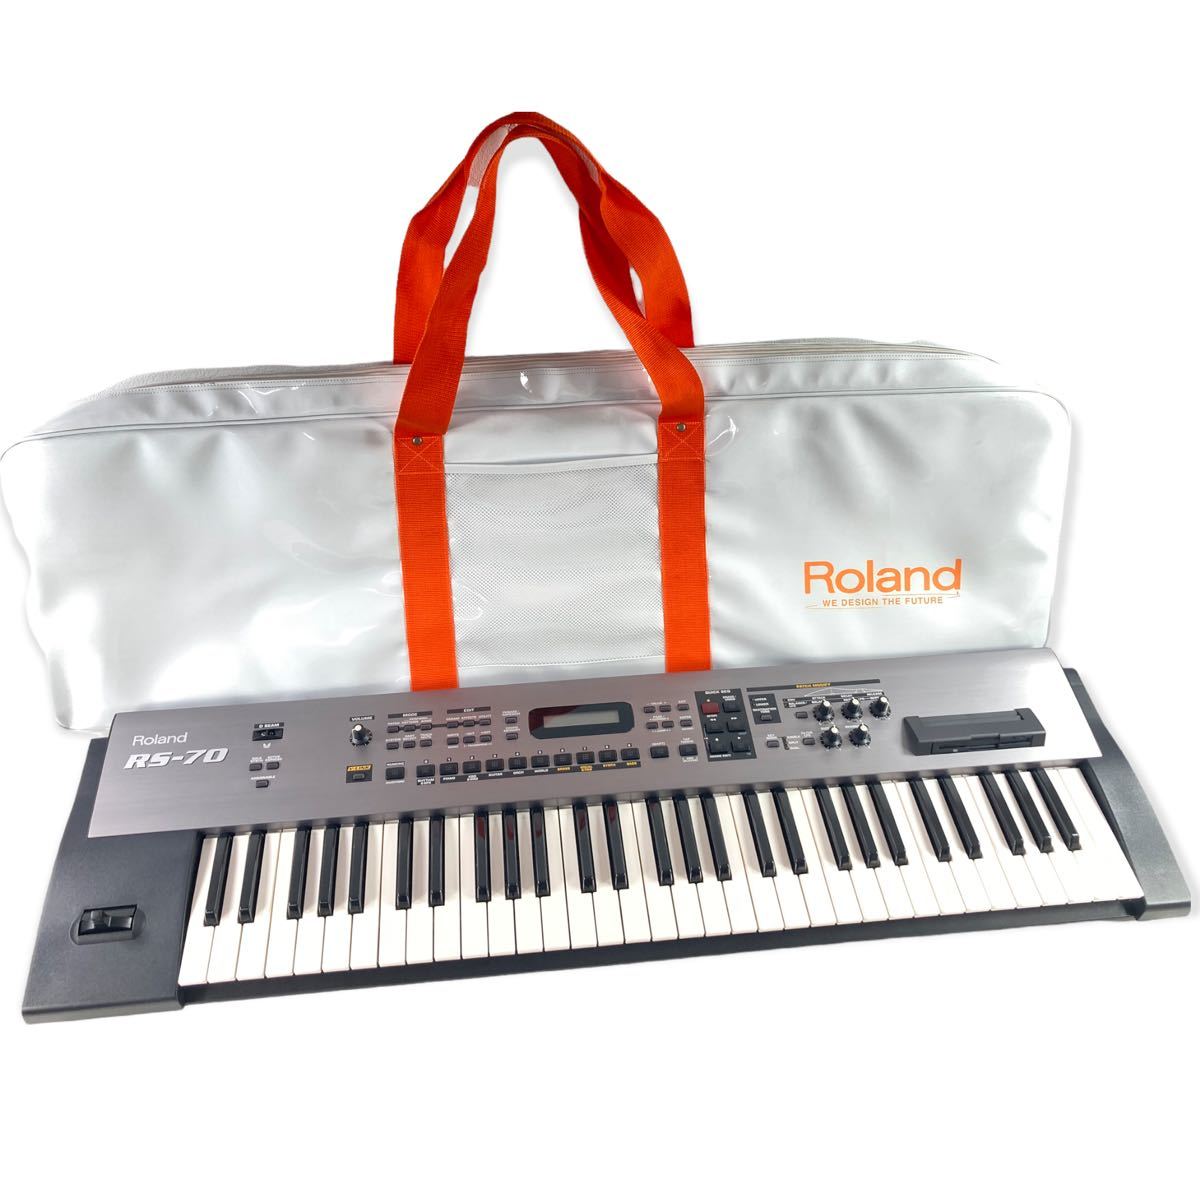 Roland ローランド RS-70 シンセサイザー 電子ピアノ キーボード